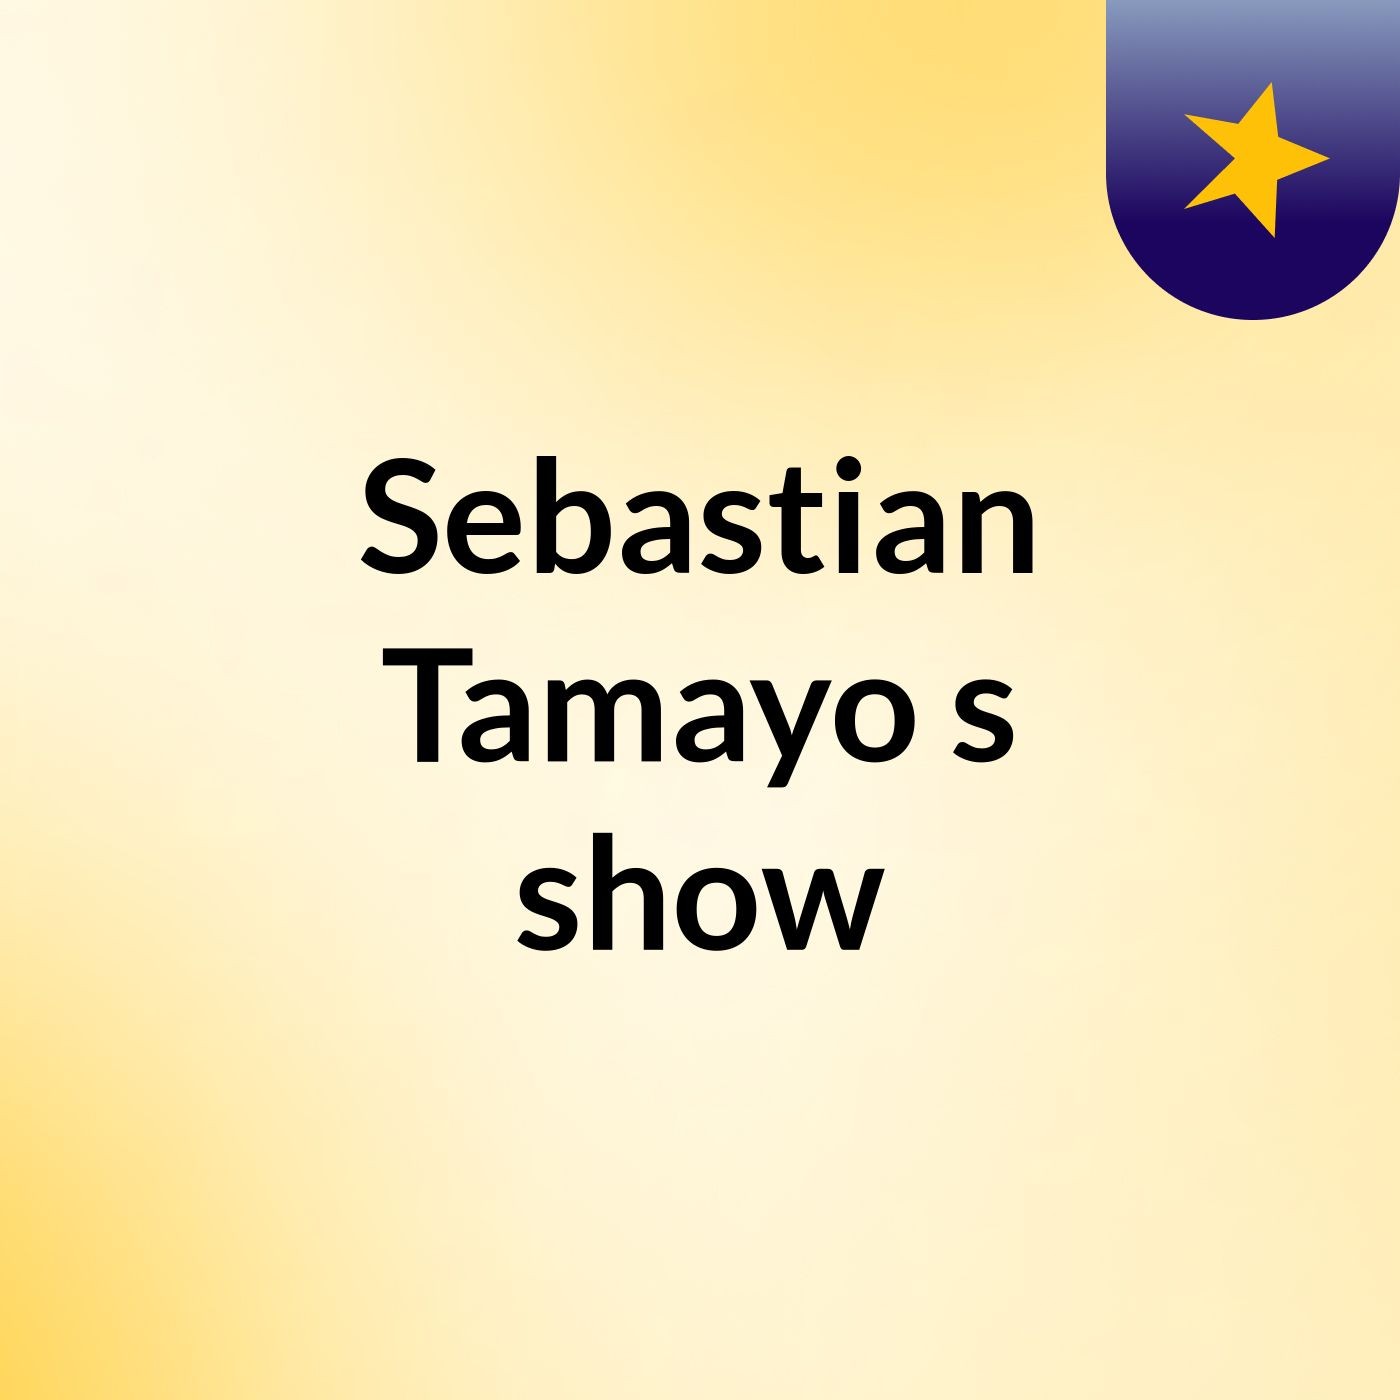 Sebastian Tamayo's show